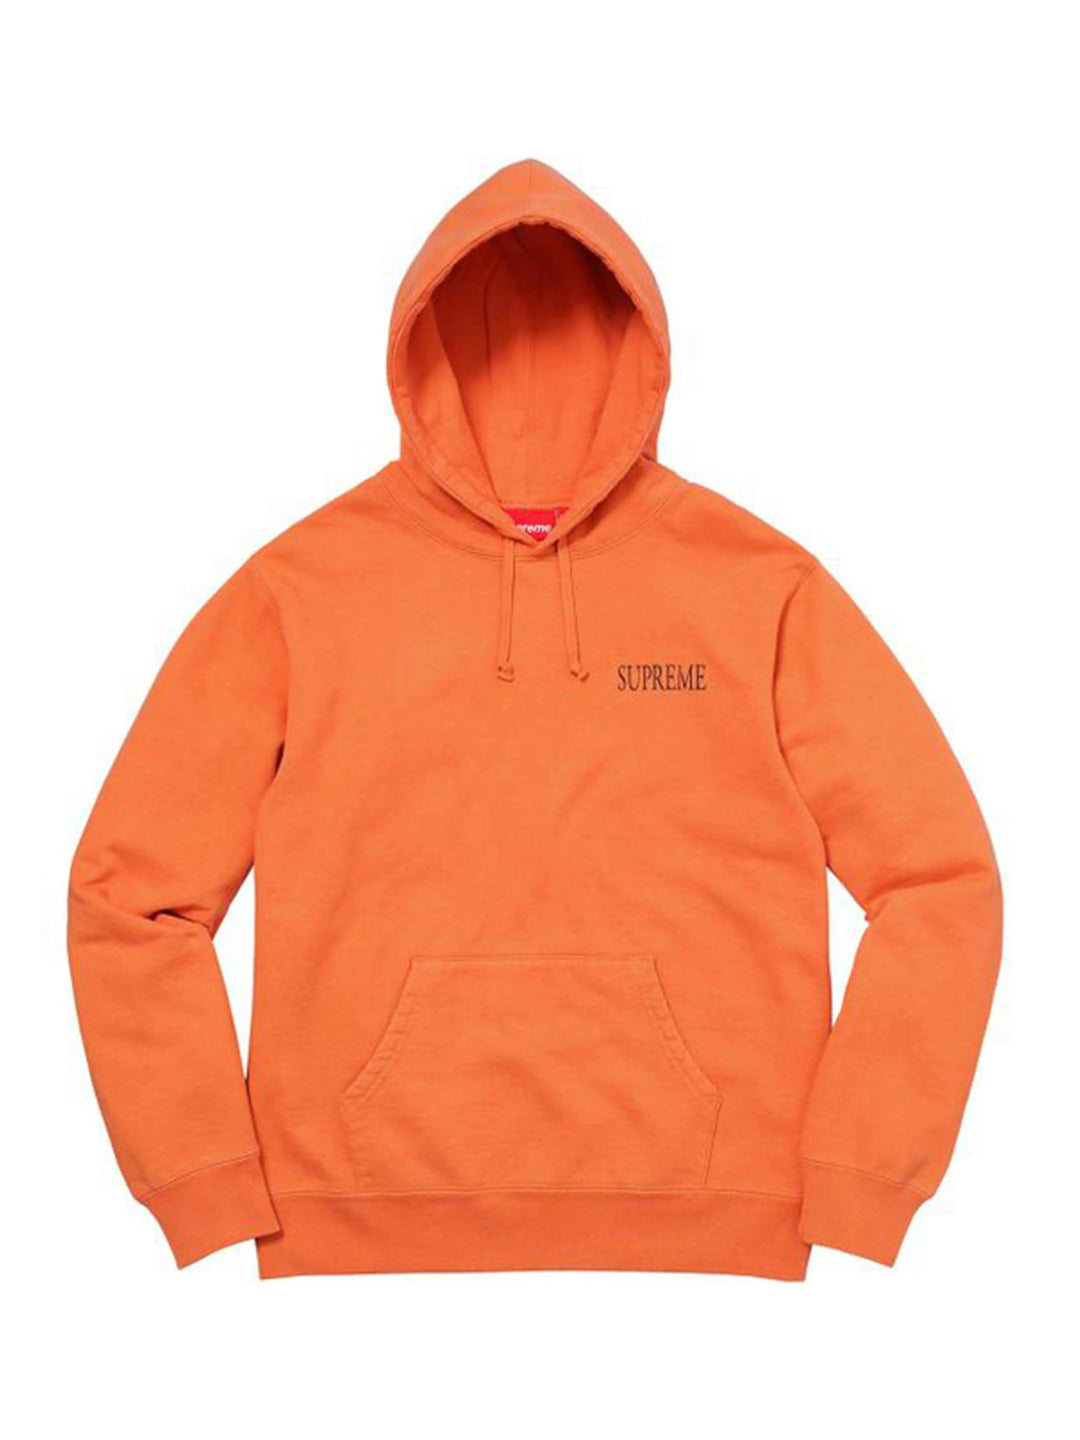 Supreme Decline Hoodie Bright Orange [FW17] Prior